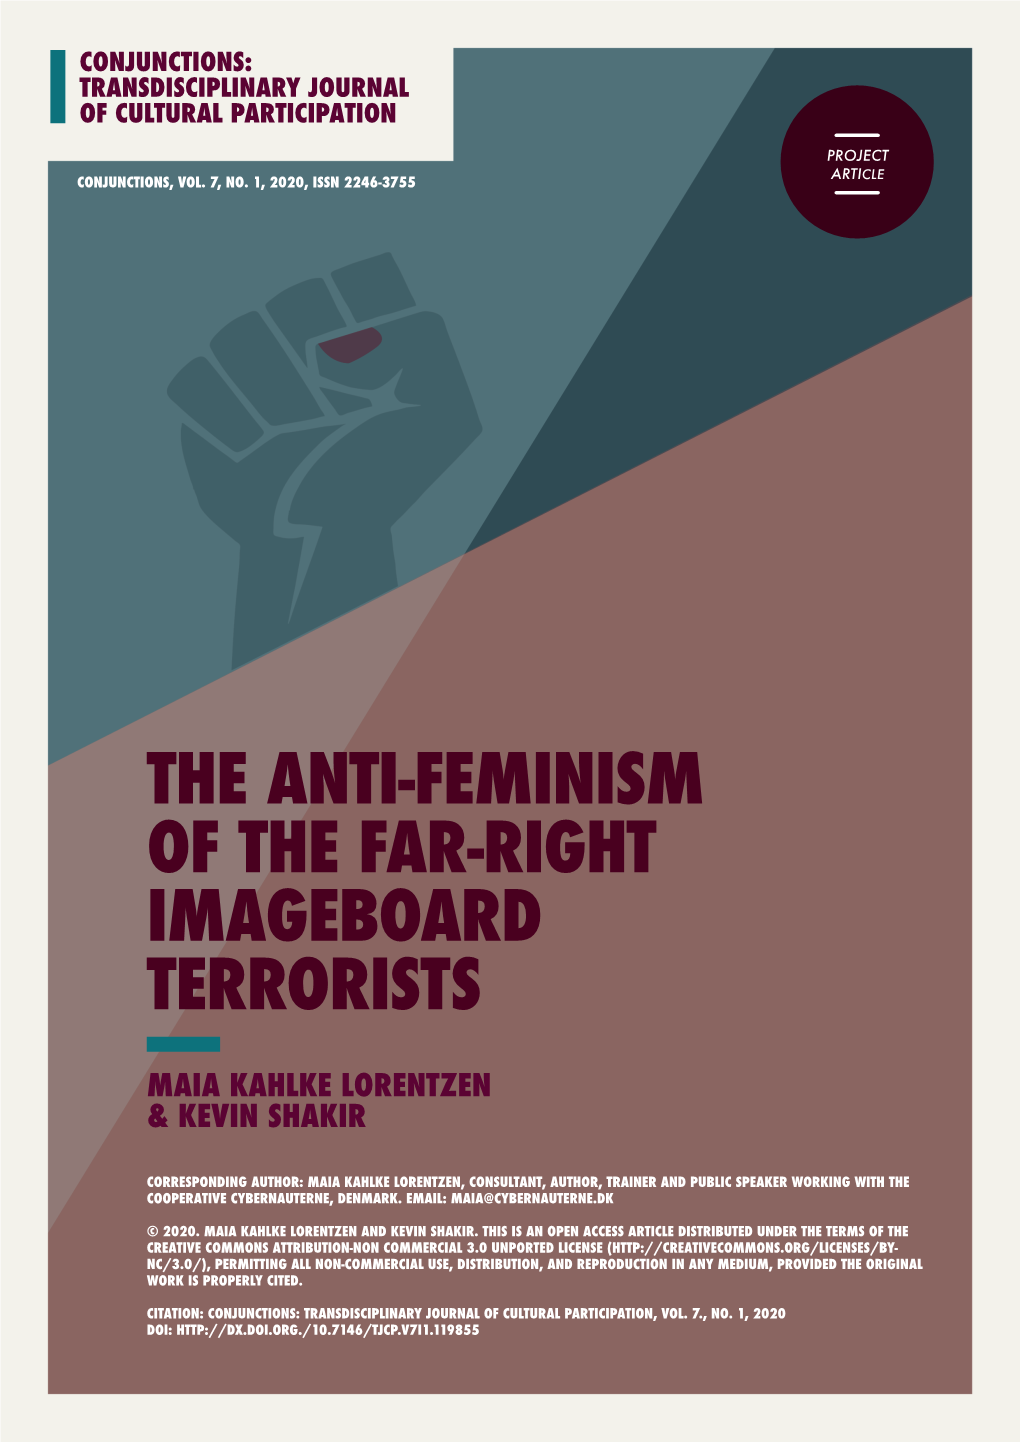 The Anti-Feminism of the Far-Right Imageboard Terrorists